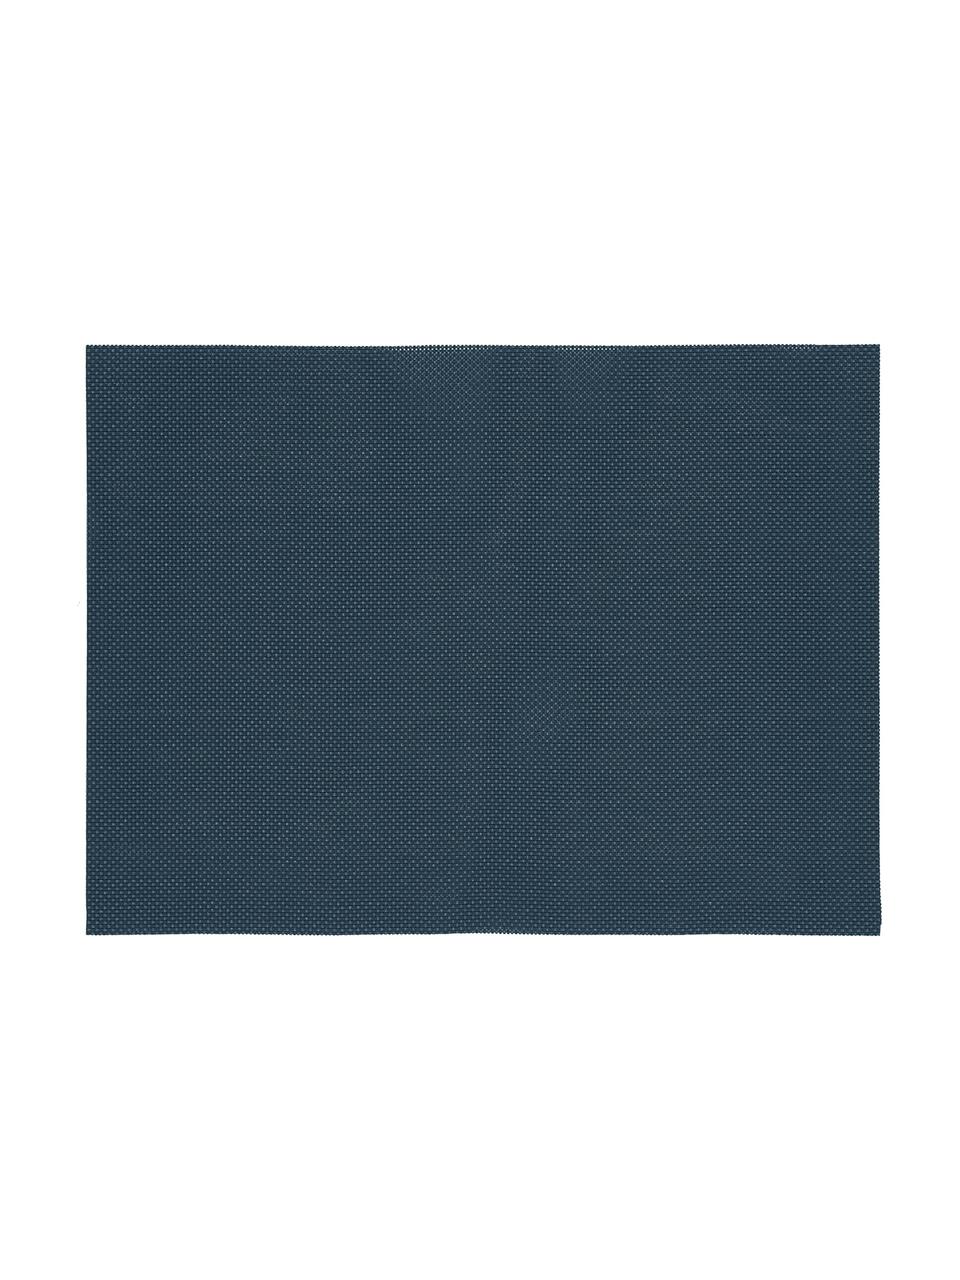 Manteles individuales Mabra, 6 uds., Plástico (PVC), Azul oscuro, An 30 x L 40 cm